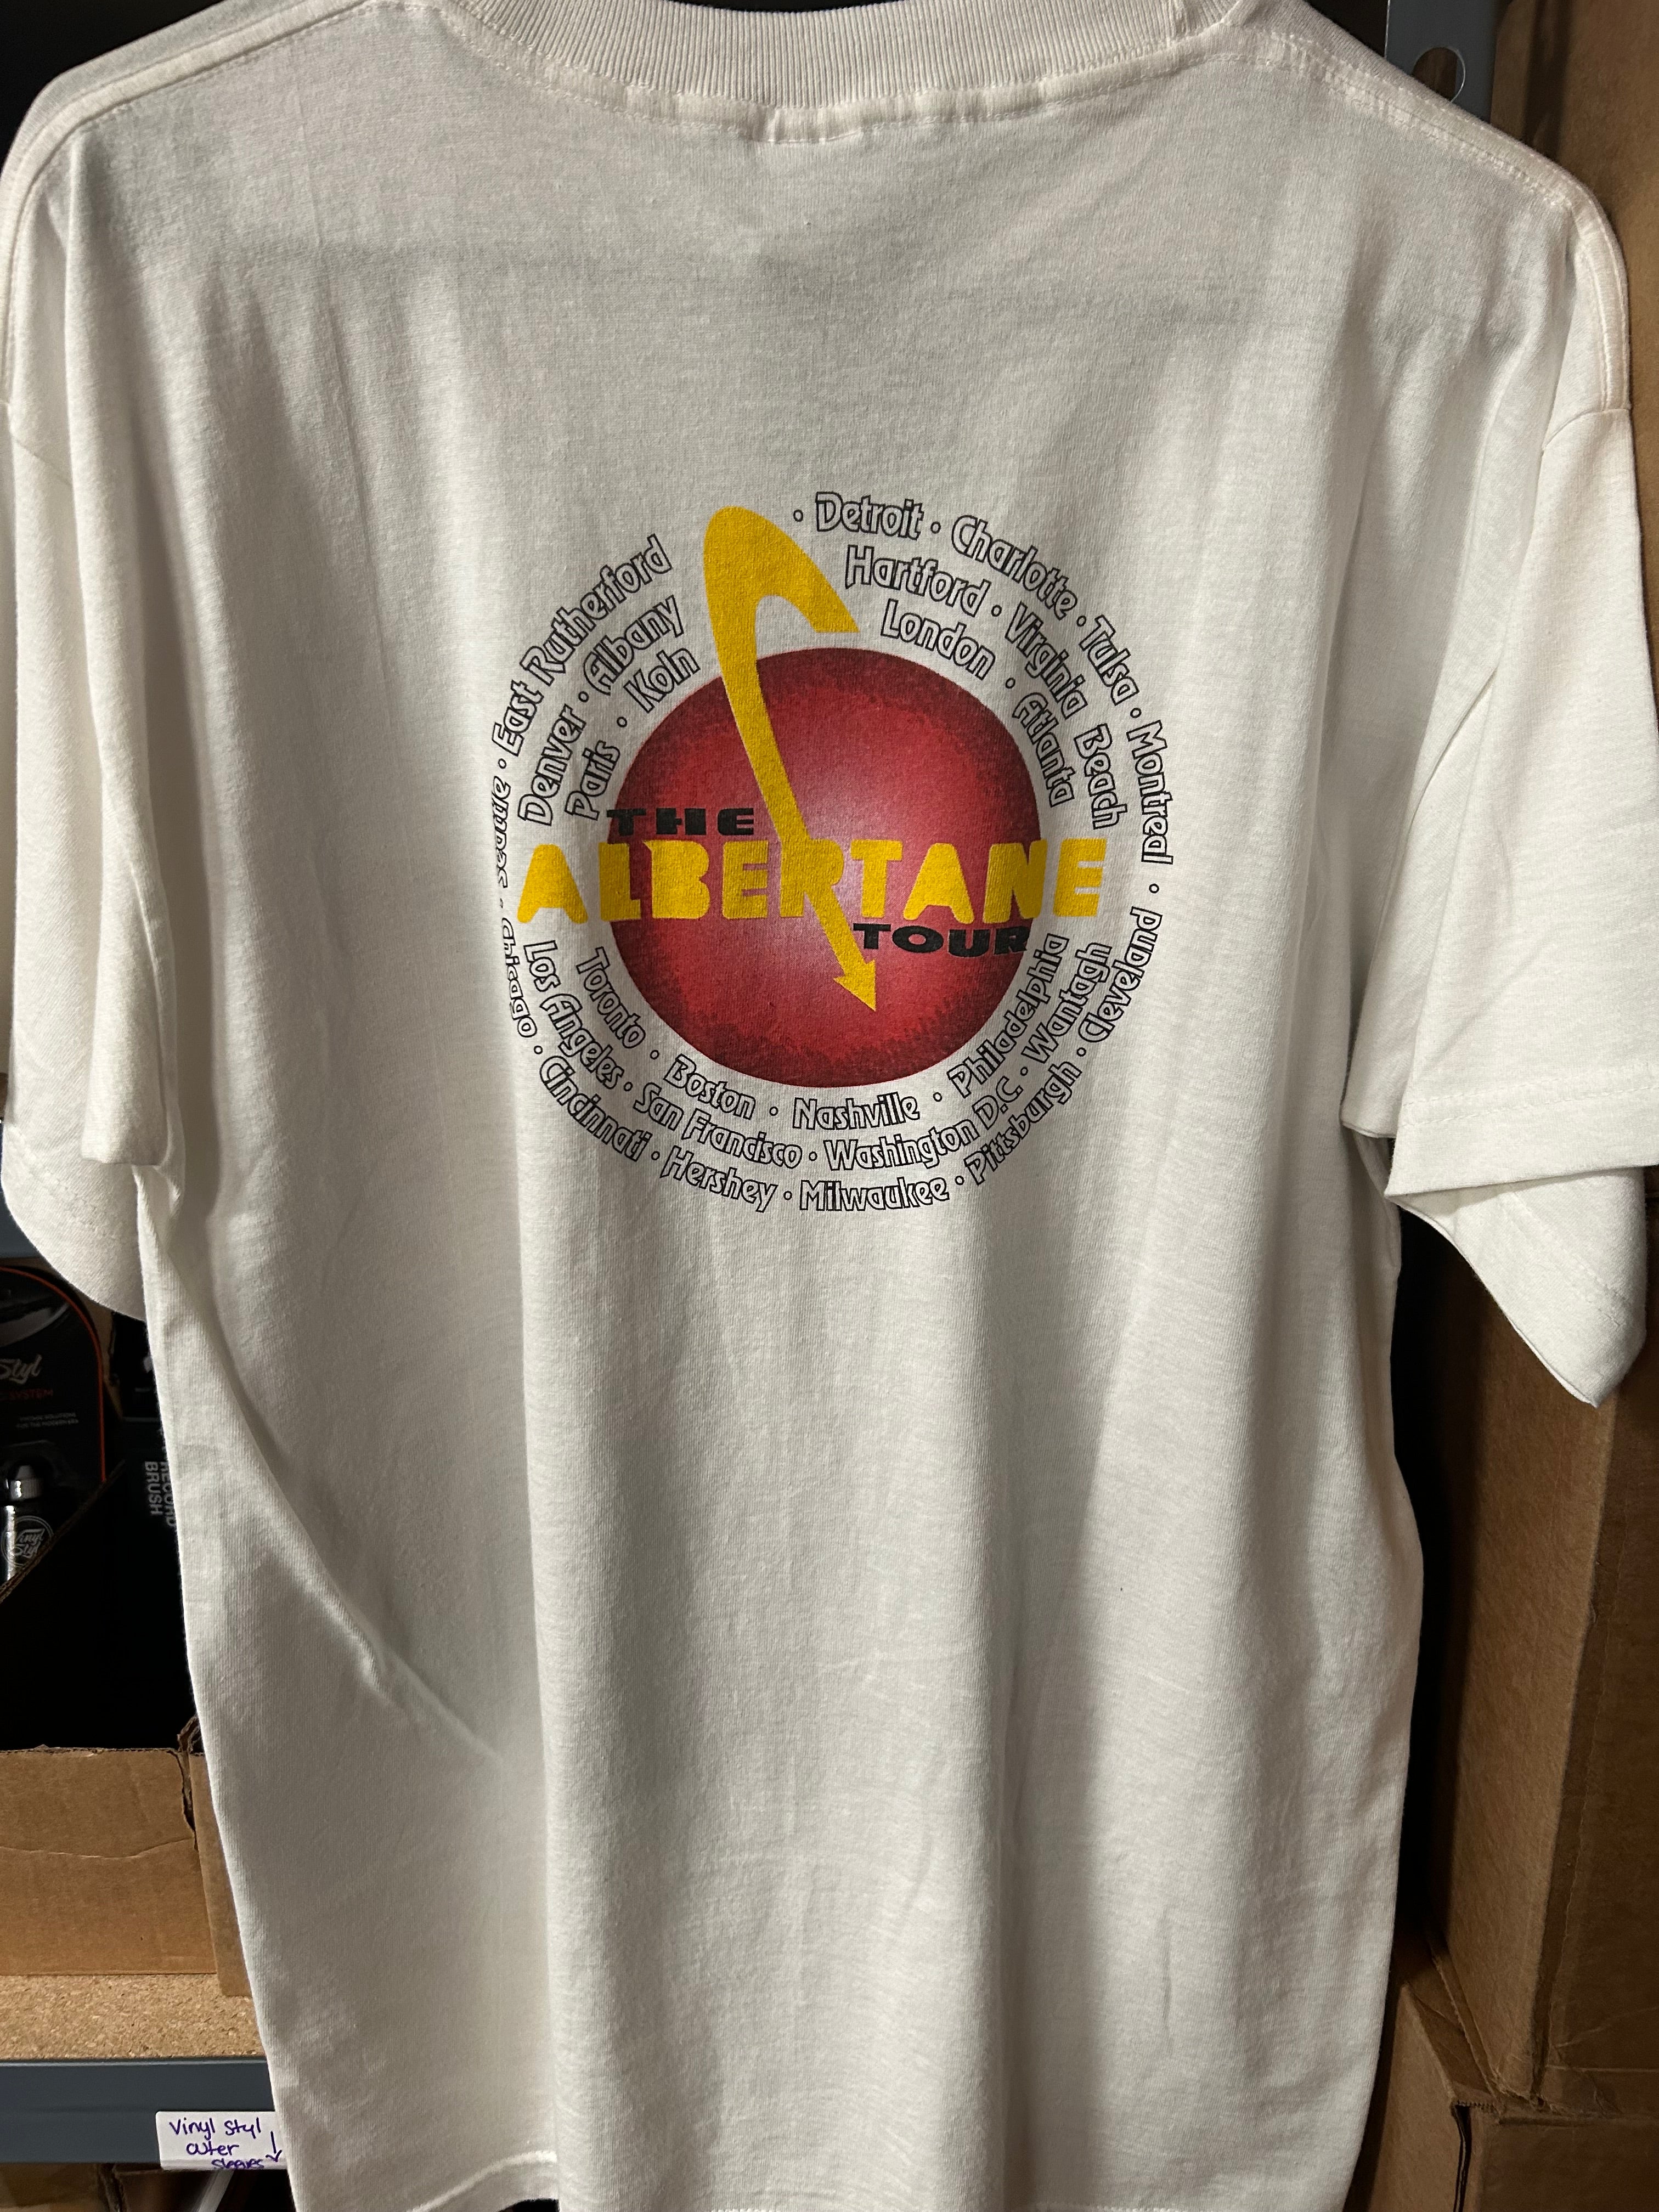 Hanson 1998 Albertane Tour T-Shirt, White, L